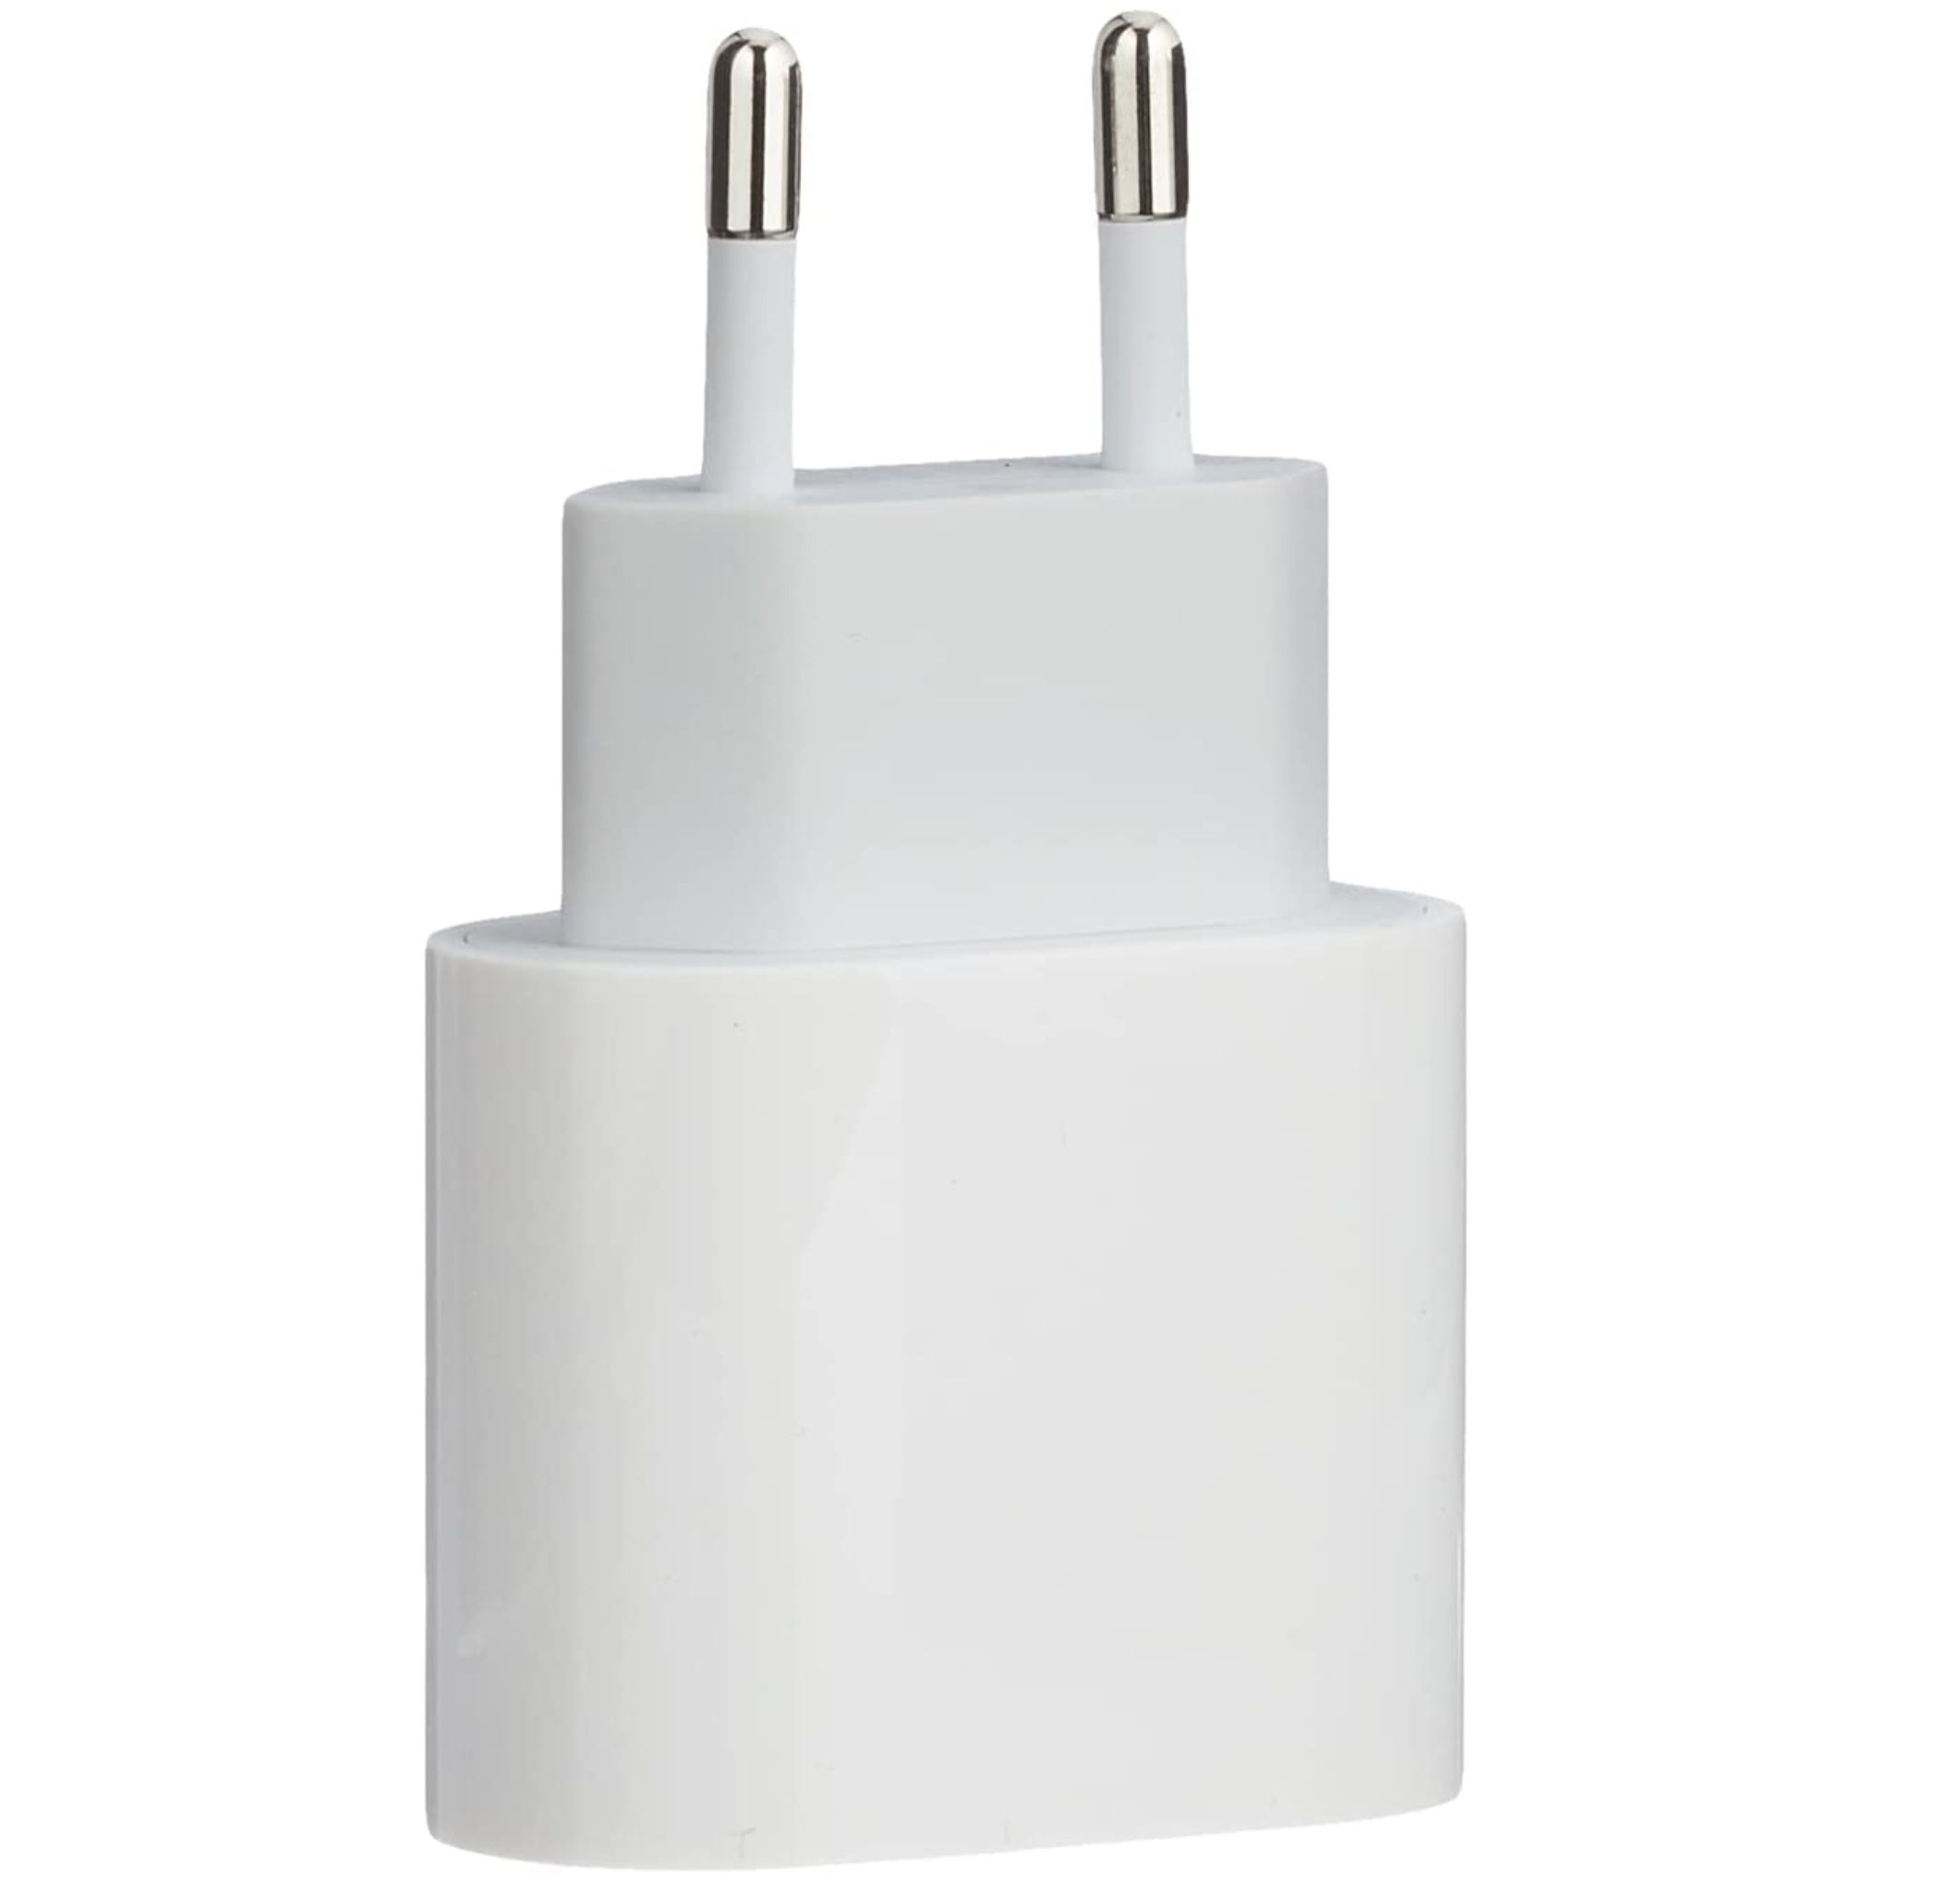 Apple 20W USB-C Power Adapter für 13,80€ (statt 22€) &#8211; Prime